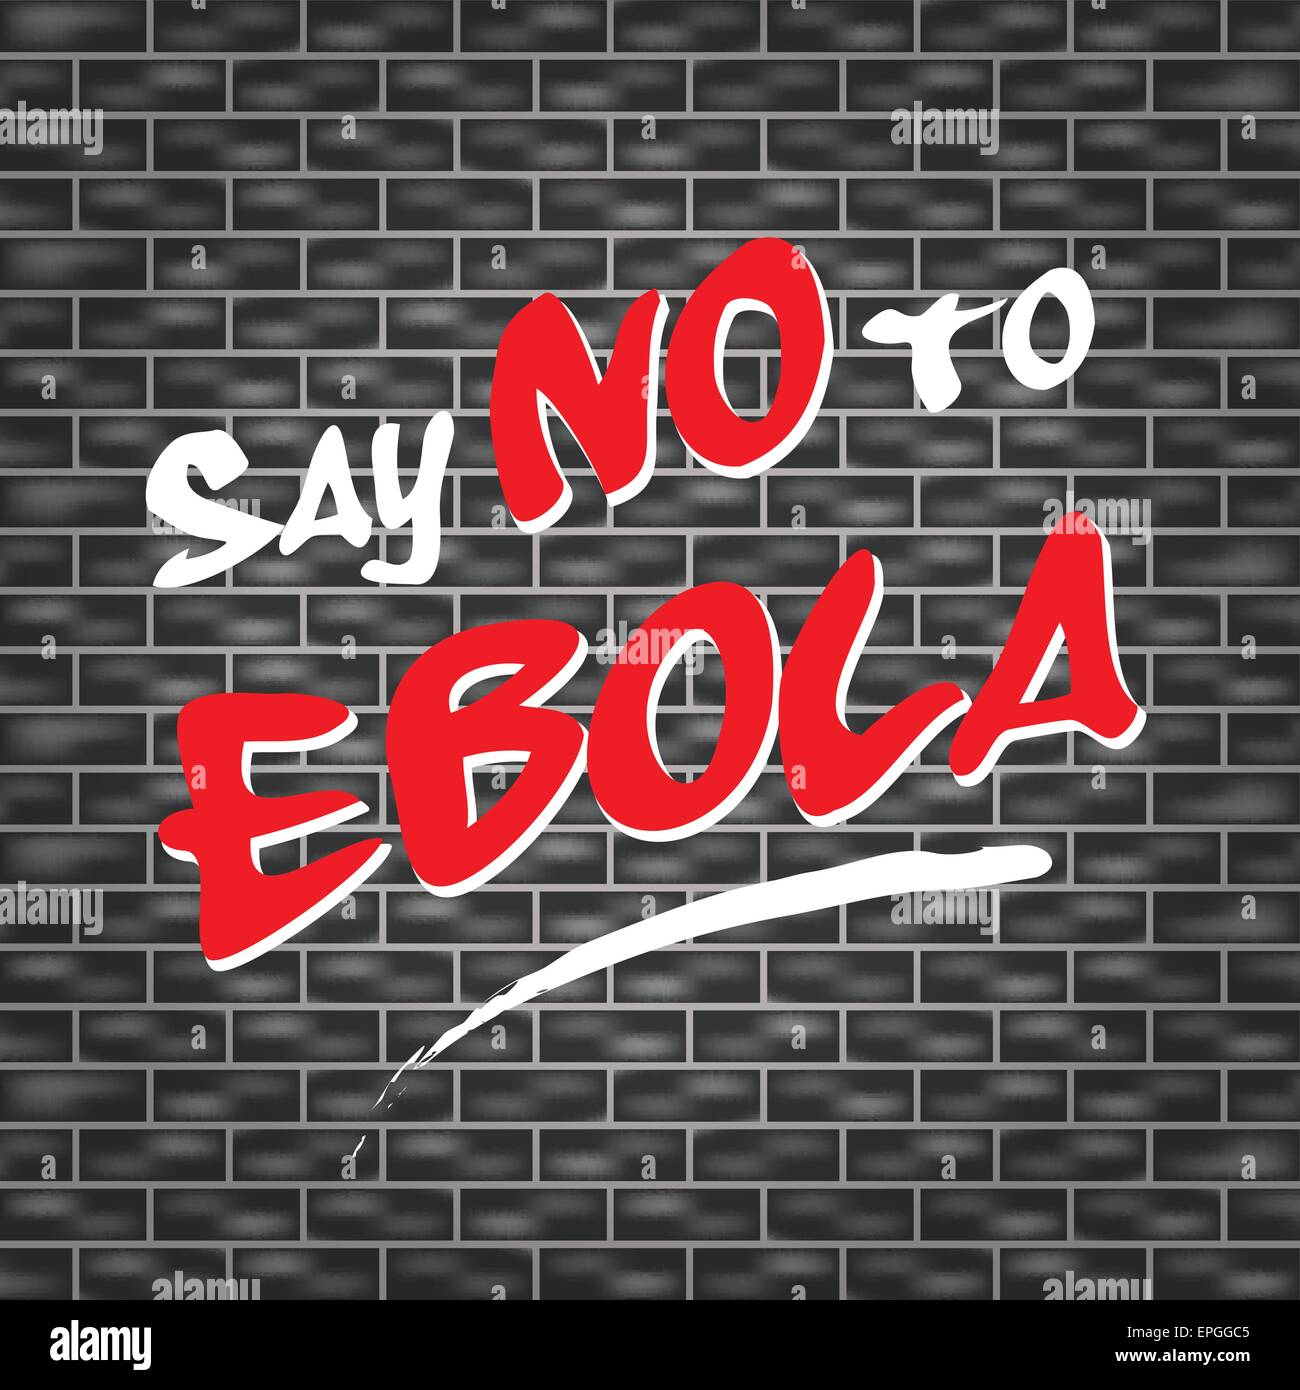 illustration of dark wall with graffiti for no ebola Stock Vector